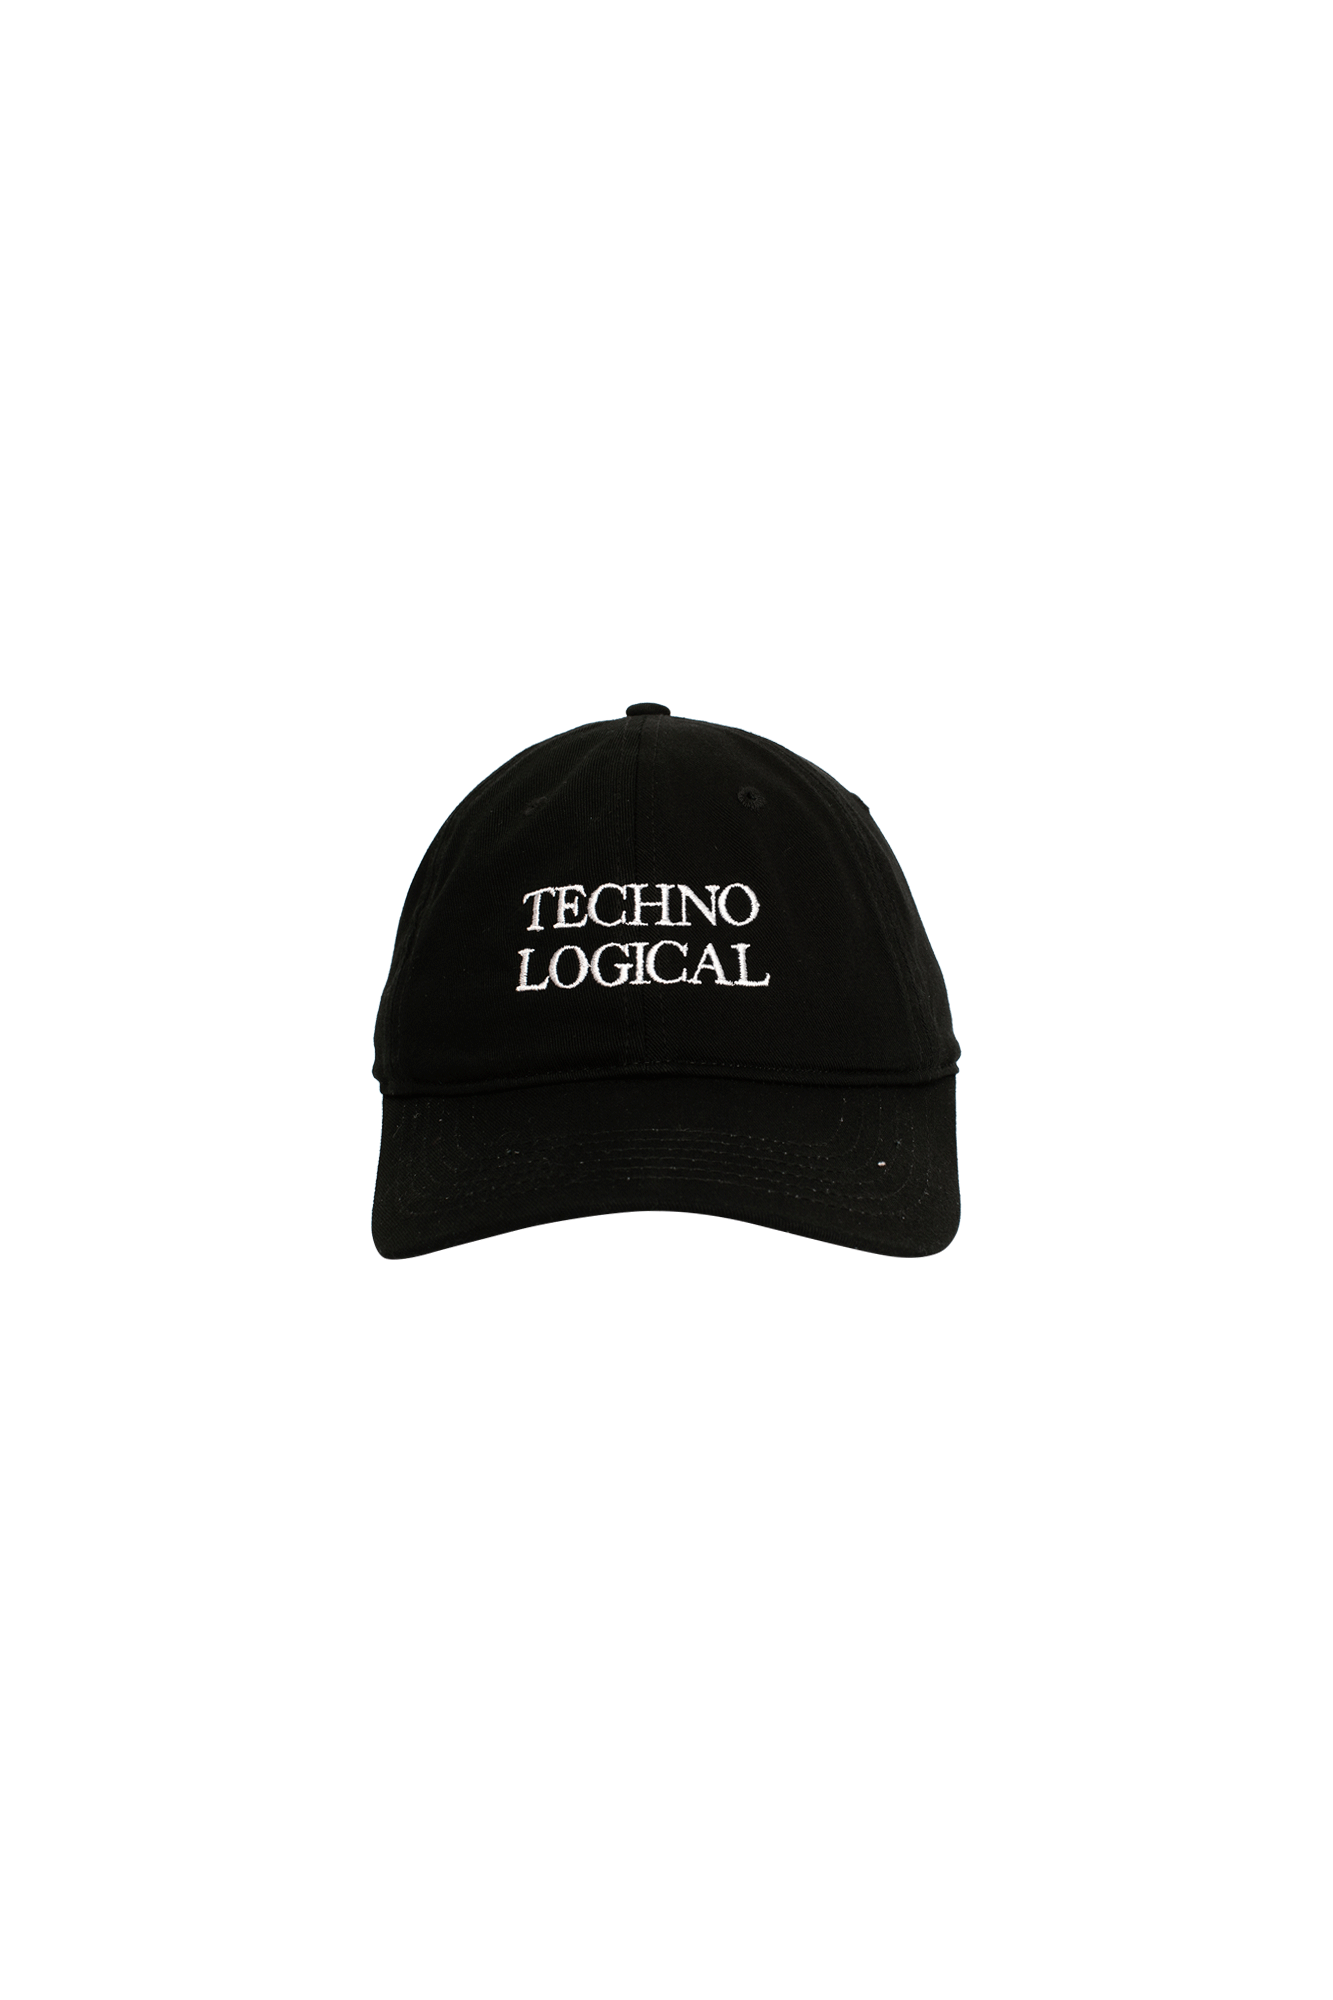 Techno Logical Hat